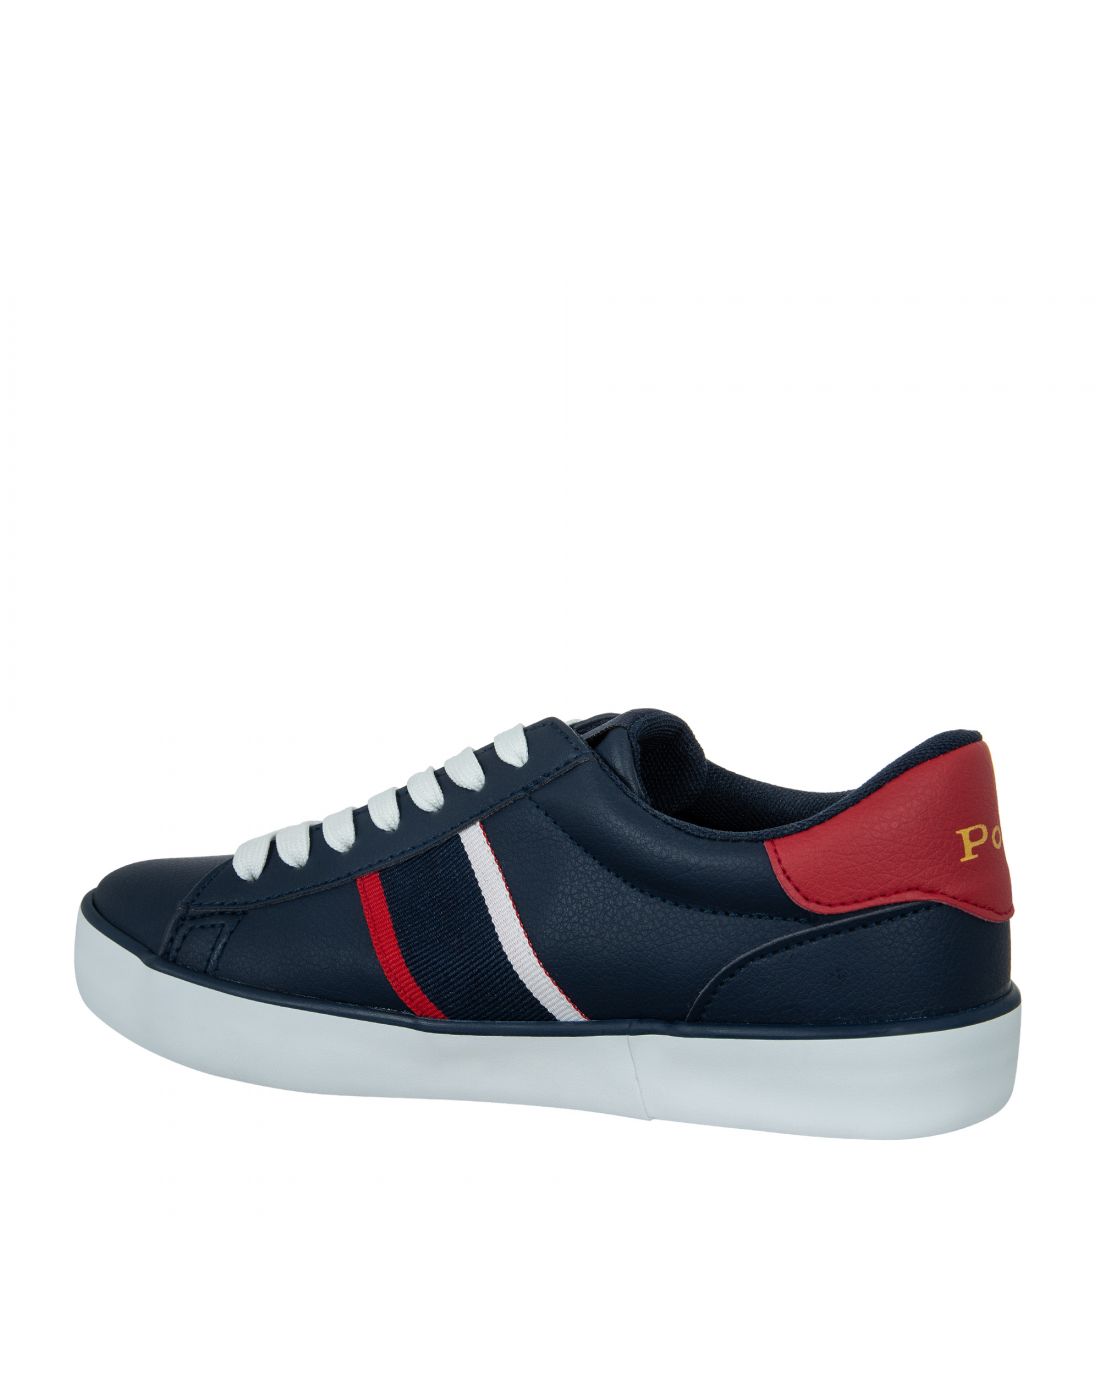 Polo Ralph Lauren Boys Sneakers